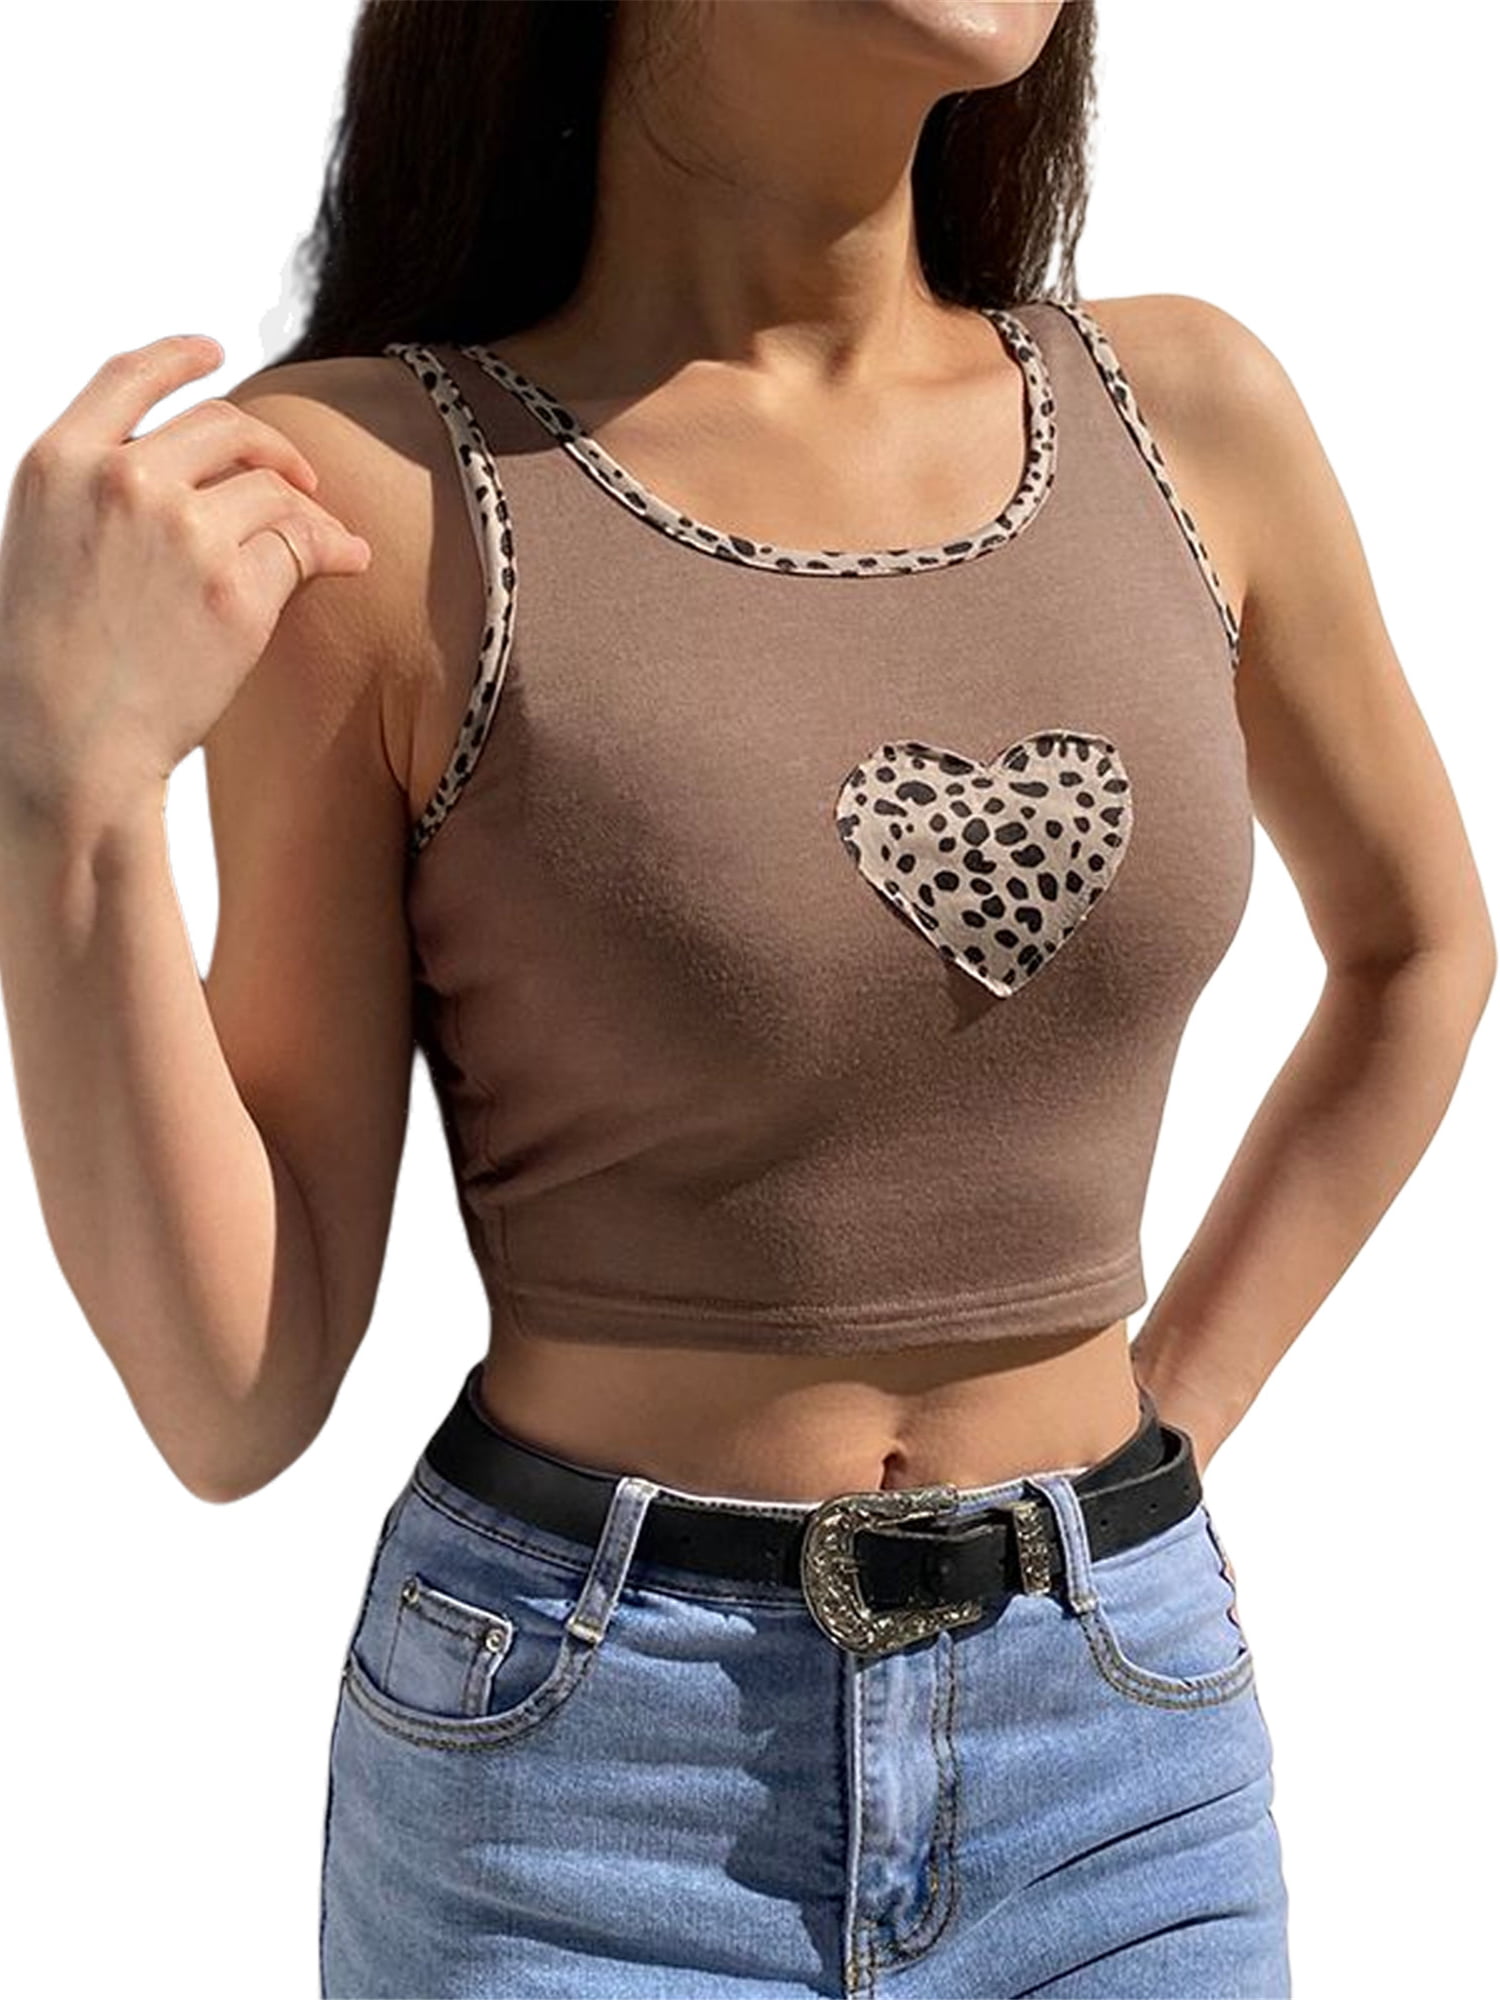 Women girls Pinstripe Summer Strap Off Shoulder Printed Tank Tops Blouses D